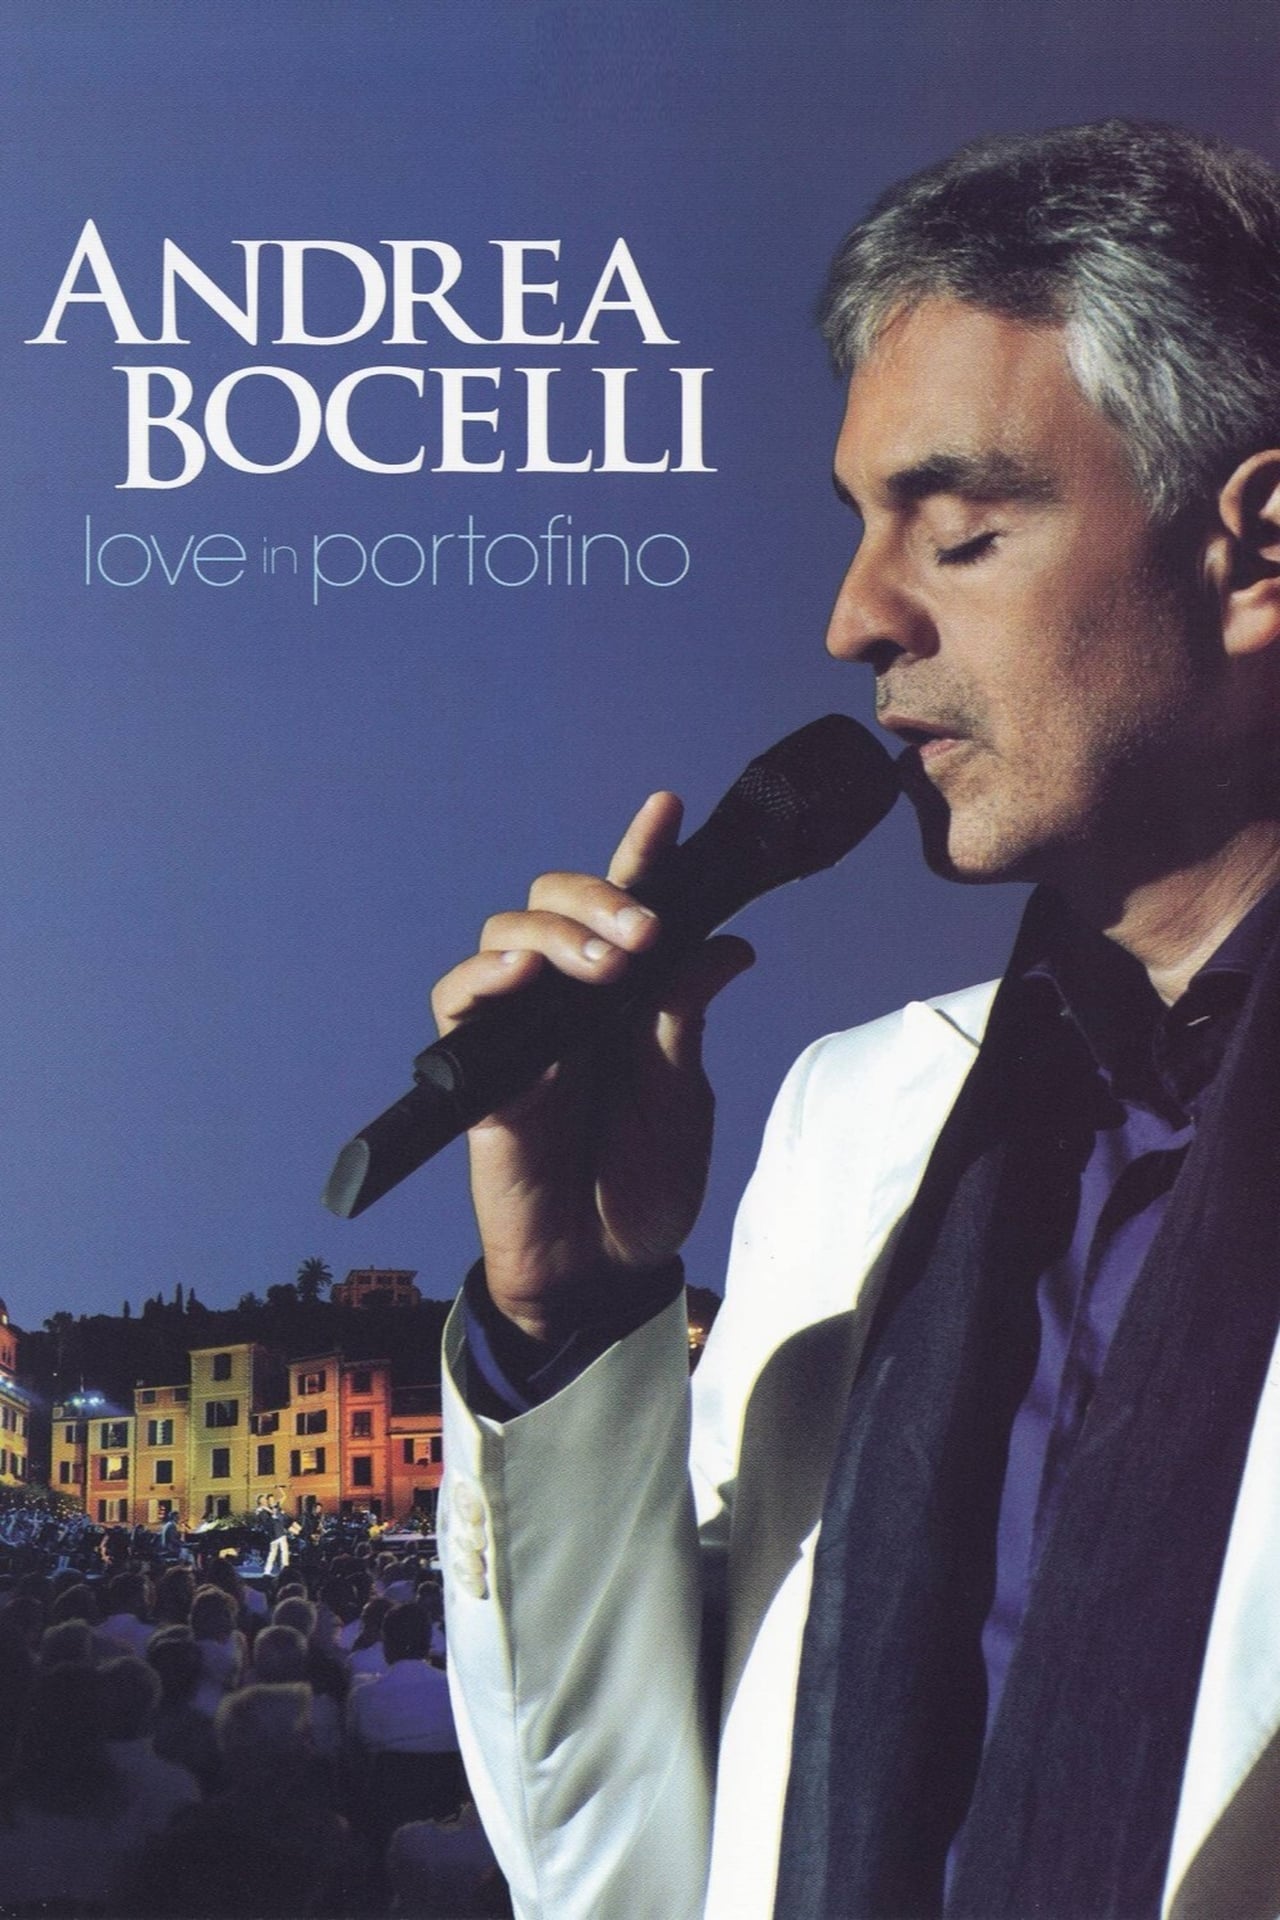 Love in portofino. Андреа Бочелли. Андреа Бочелли Портофино. DVD обложка Andrea Bocelli - Love in Portofino. Певец Andrea Bocelli.